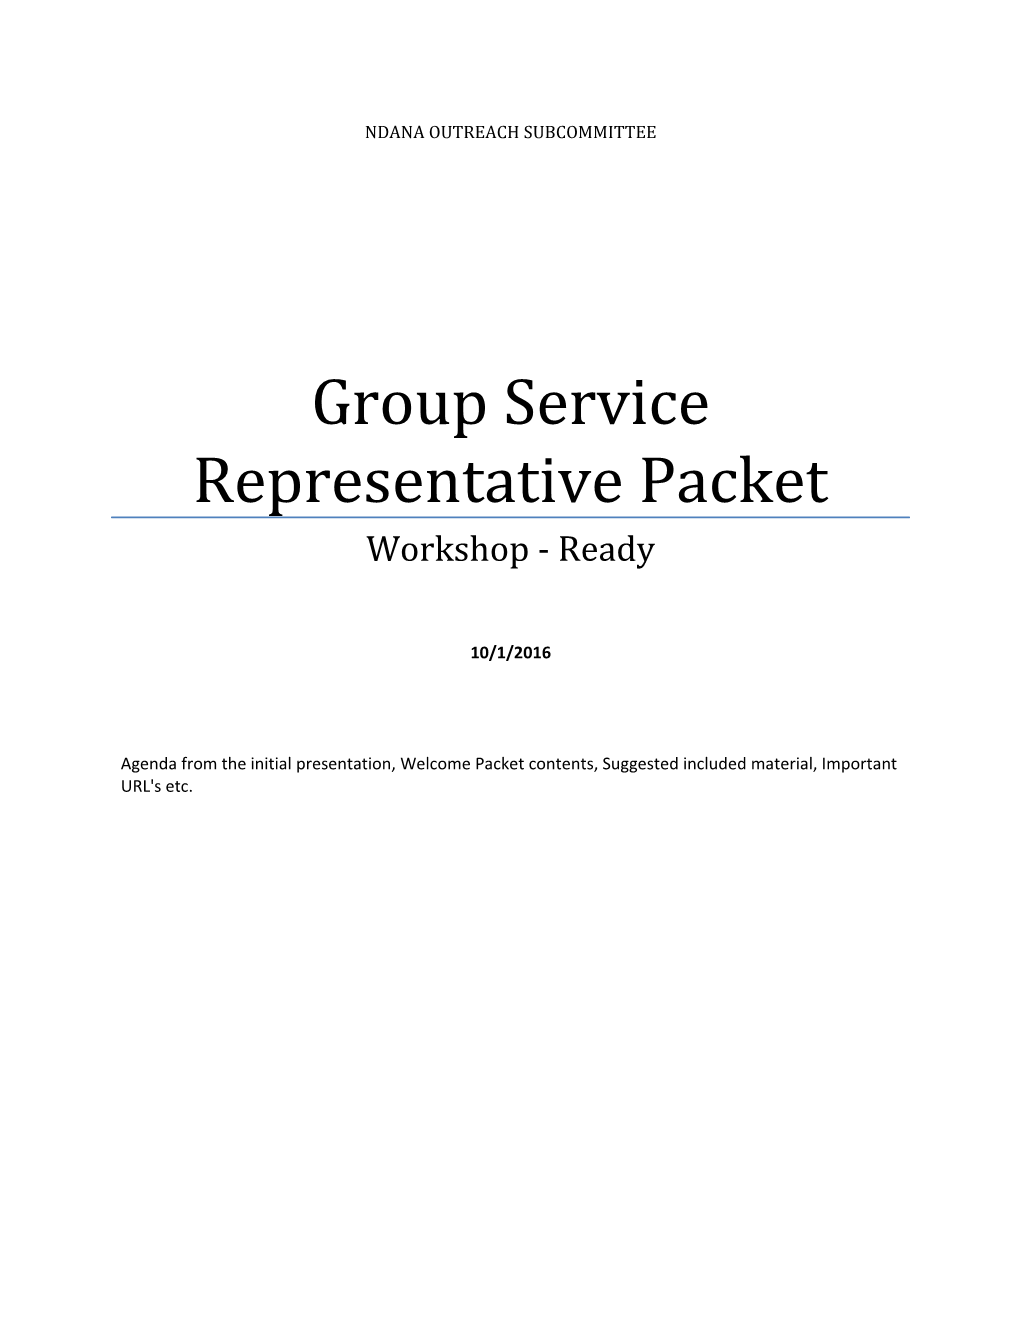 Group Service Representative Packet